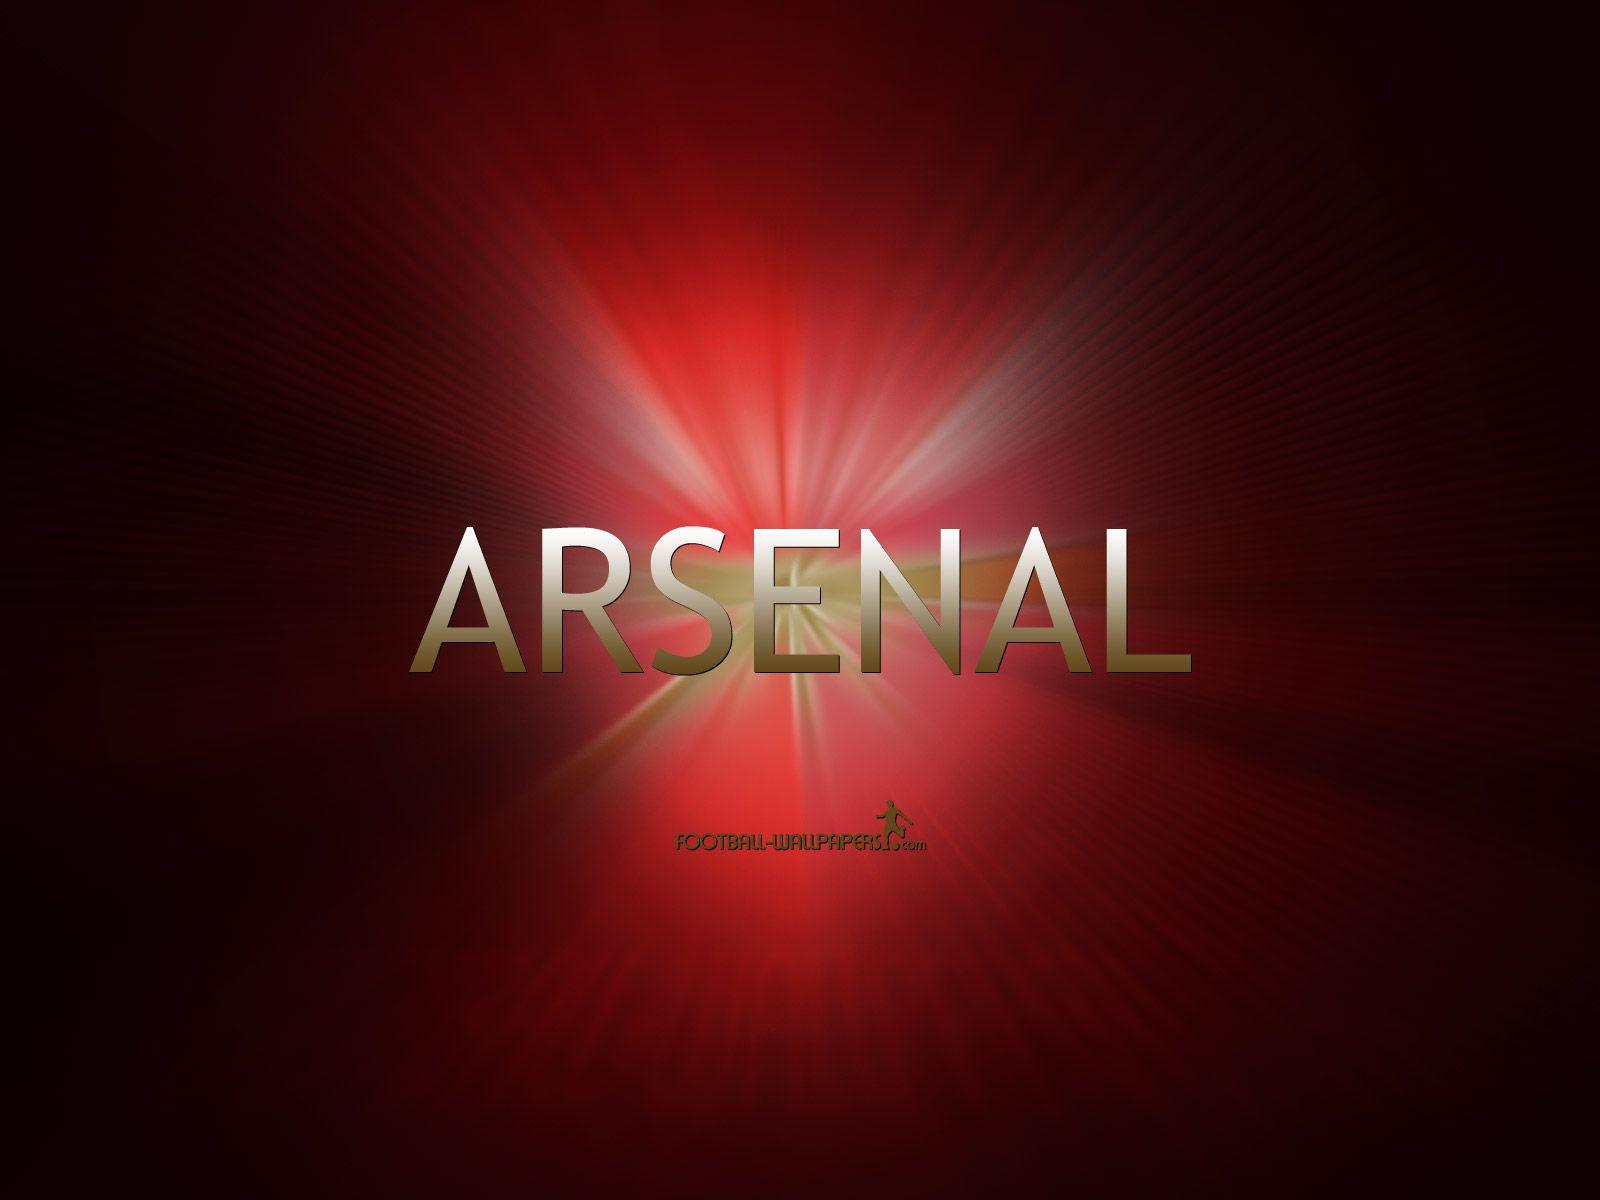 1600×1200. Arsenal FC Wallpaper